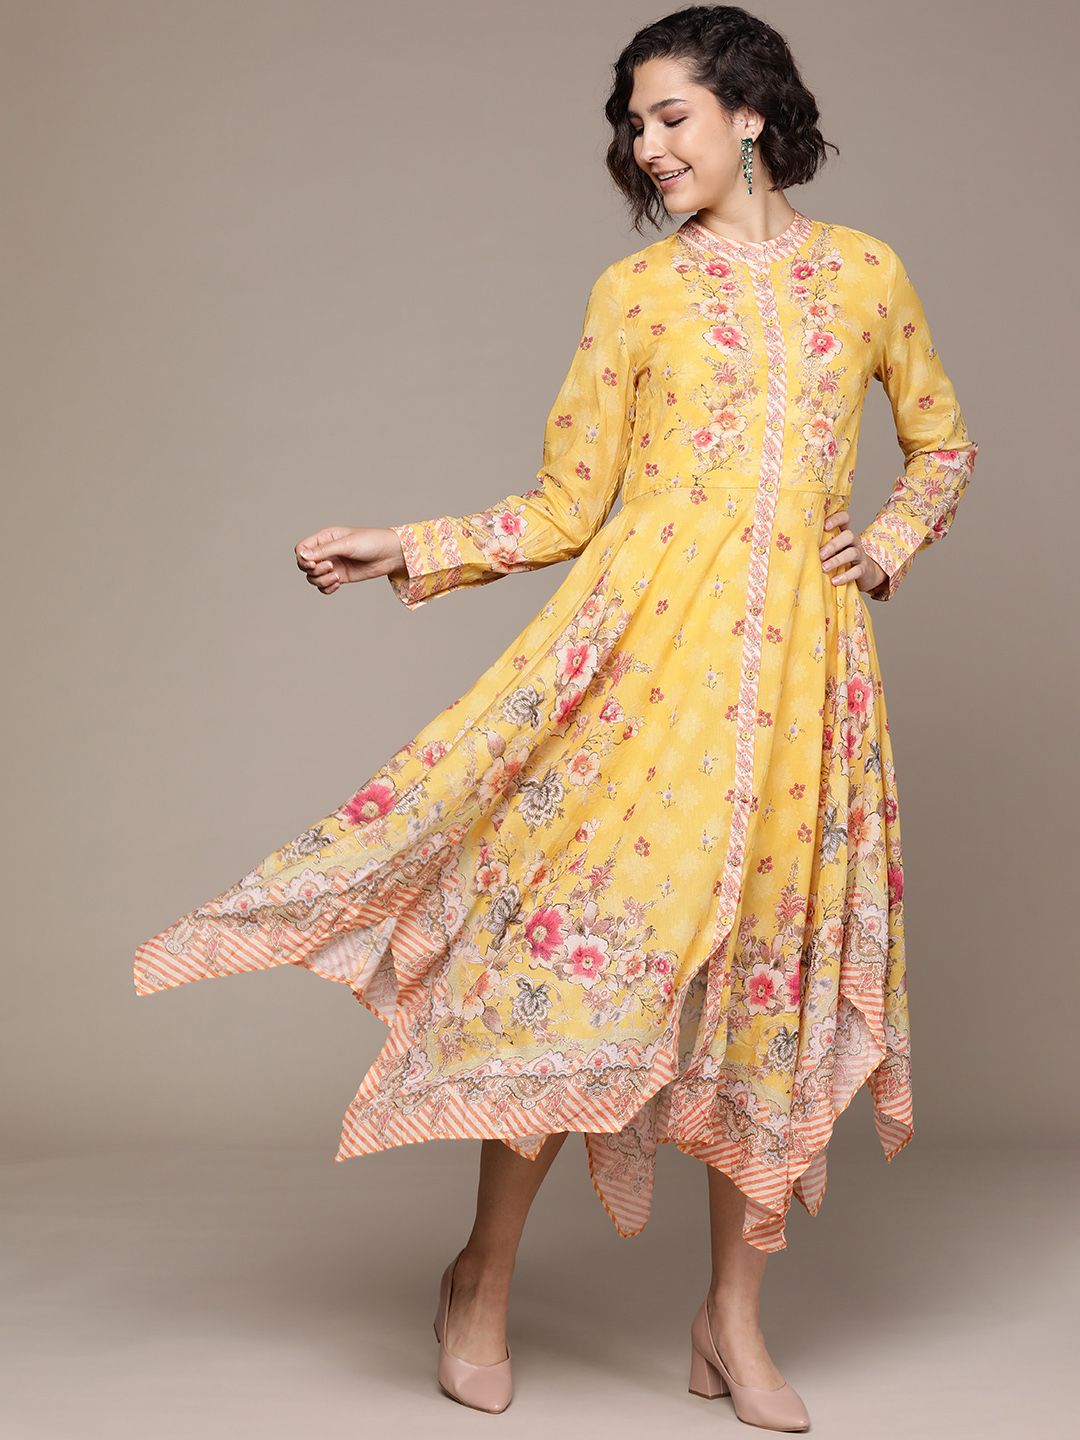 Ritu Kumar Yellow Floral Ethnic A-Line Dress Price in India